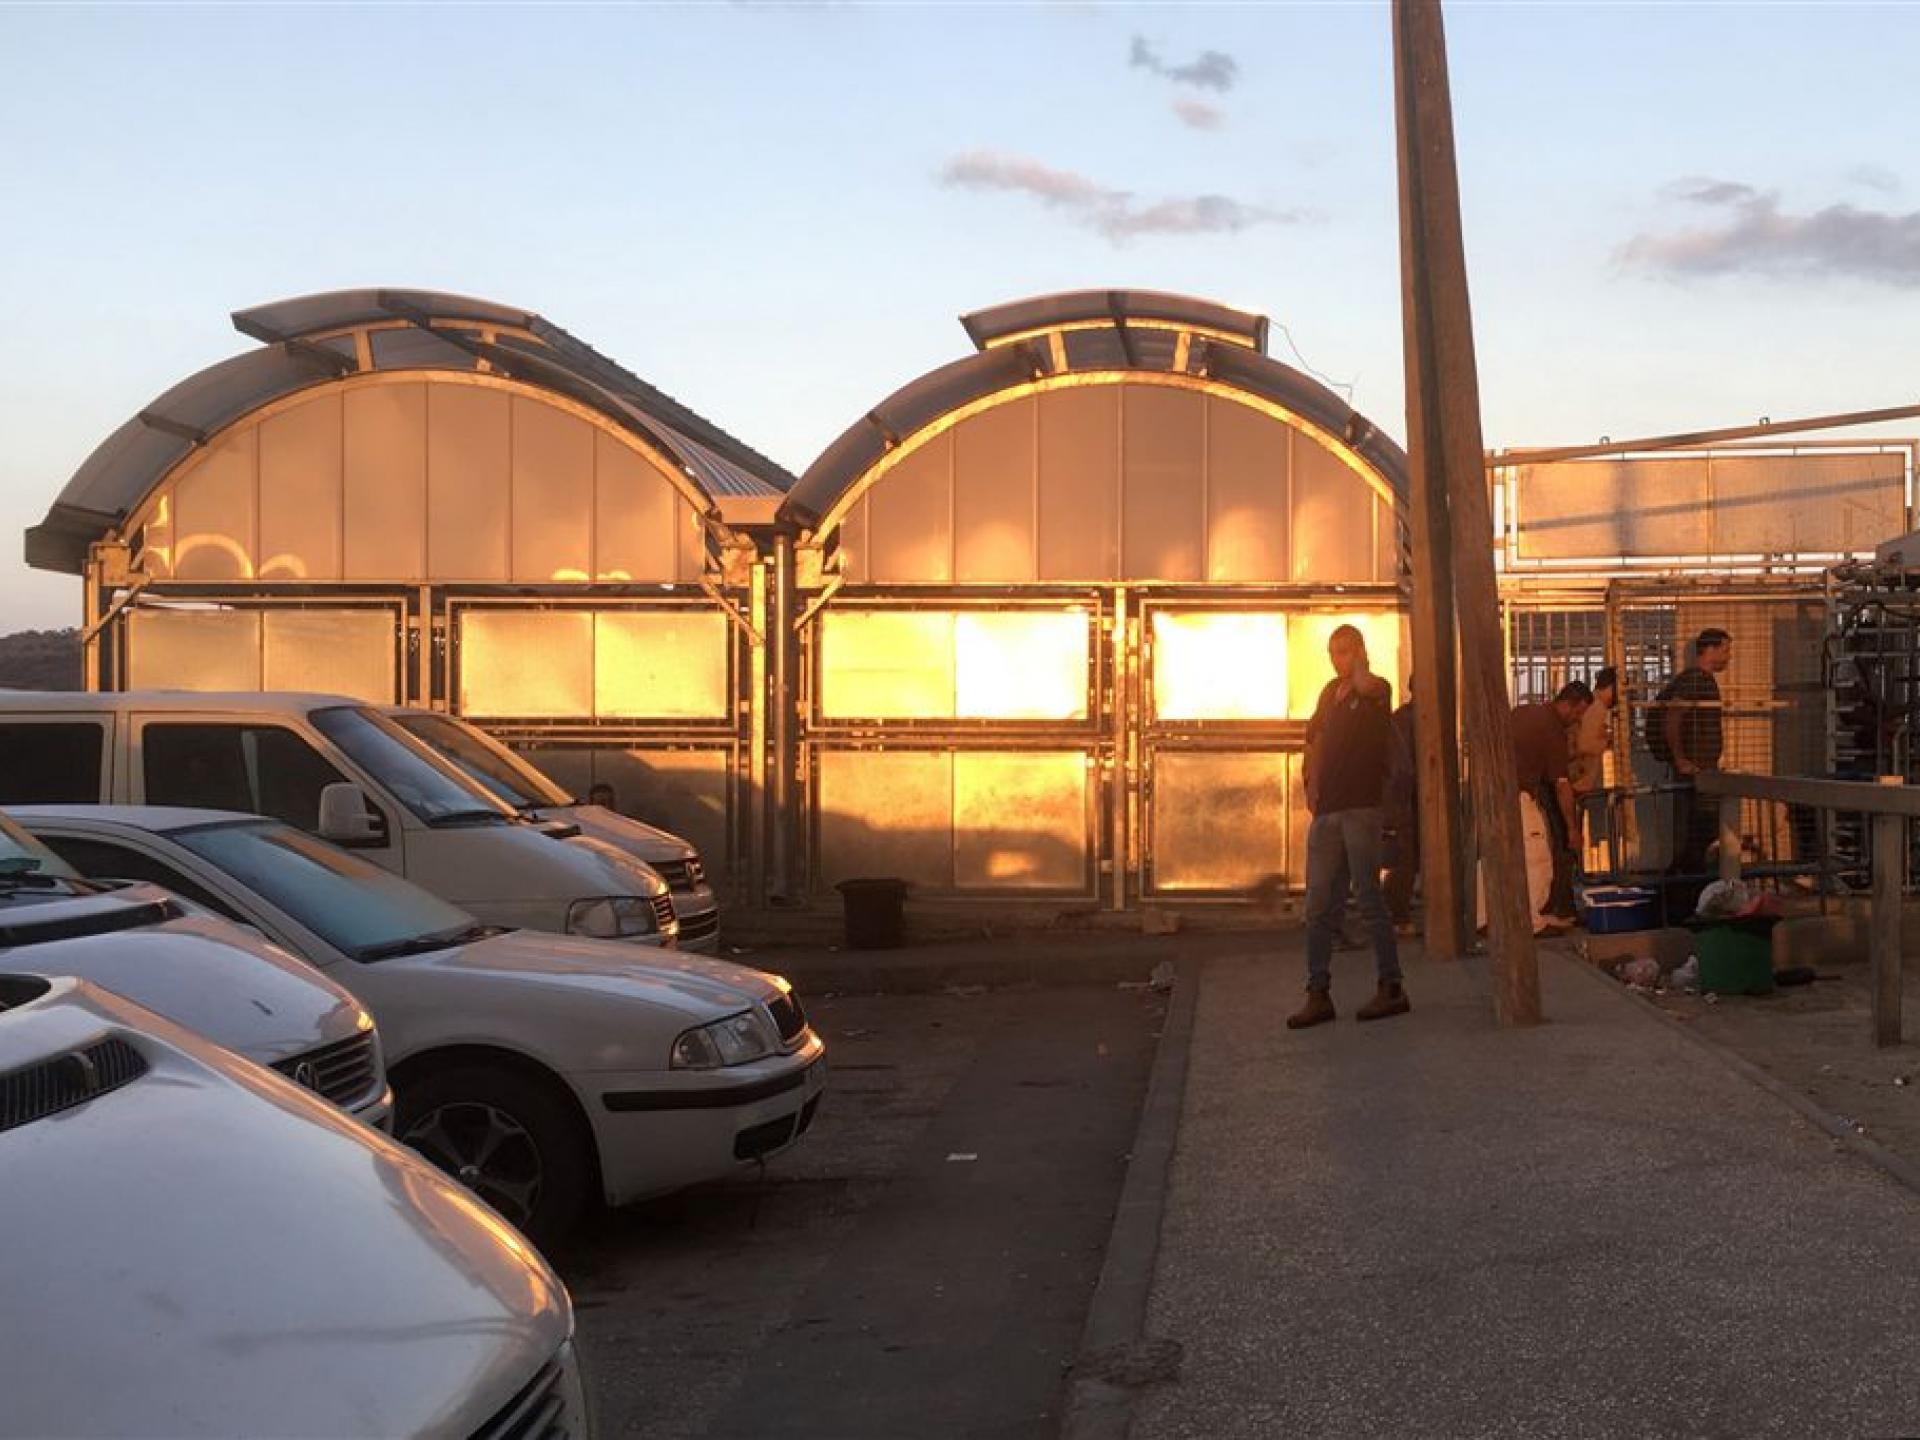 Barta’a  Reihan Checkpoint: The new facility shining in the sun